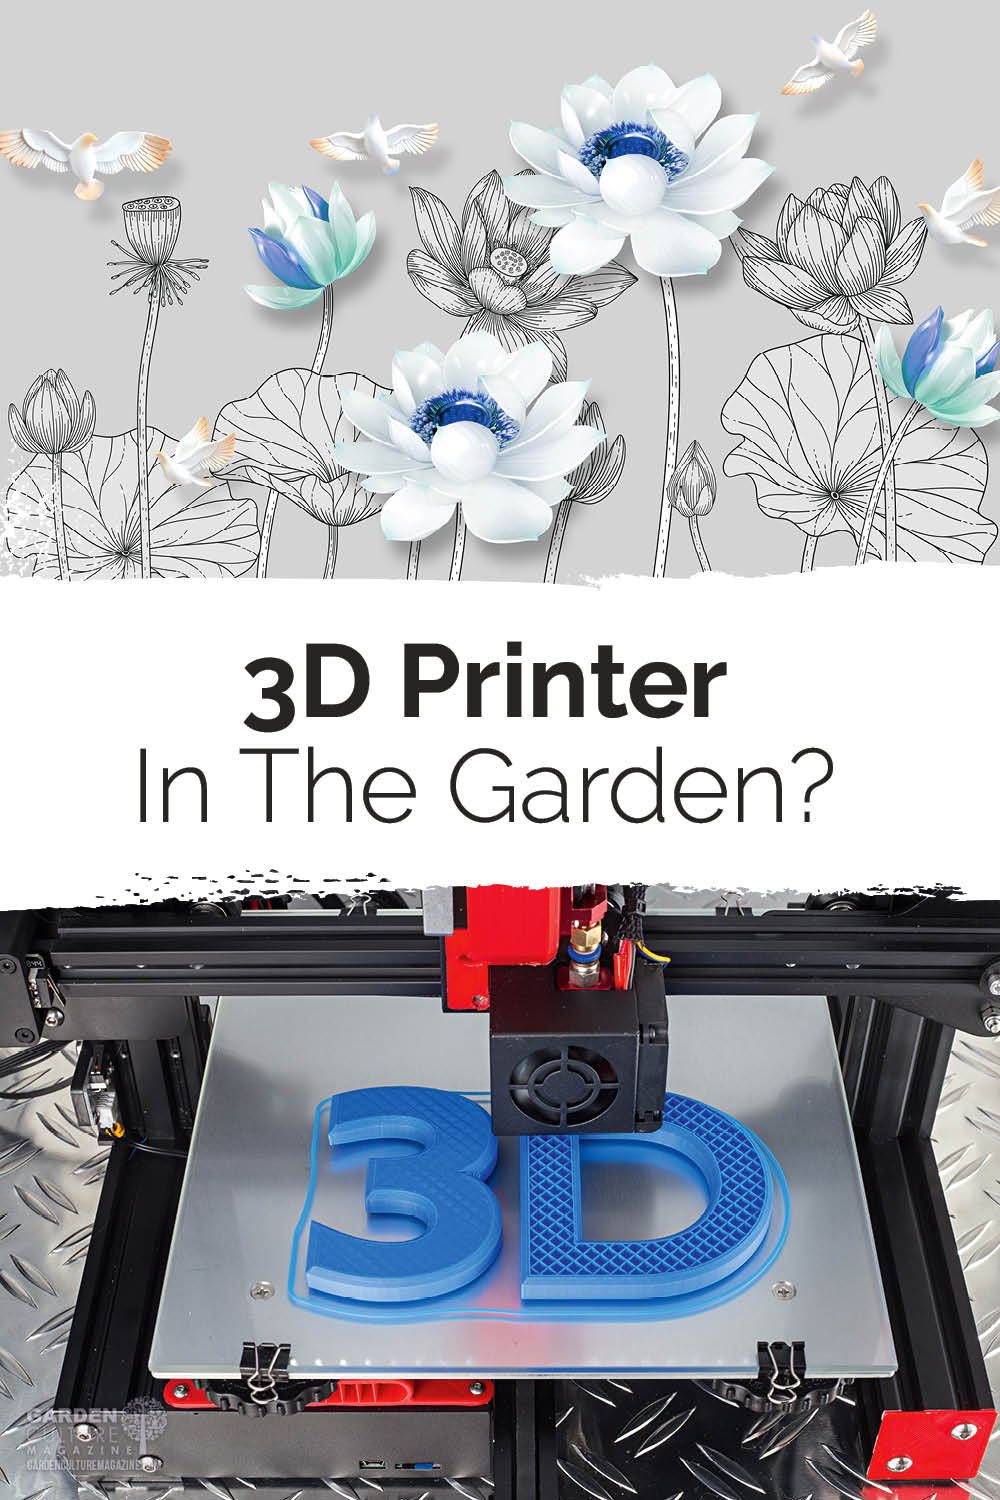 3D Printer in the garden